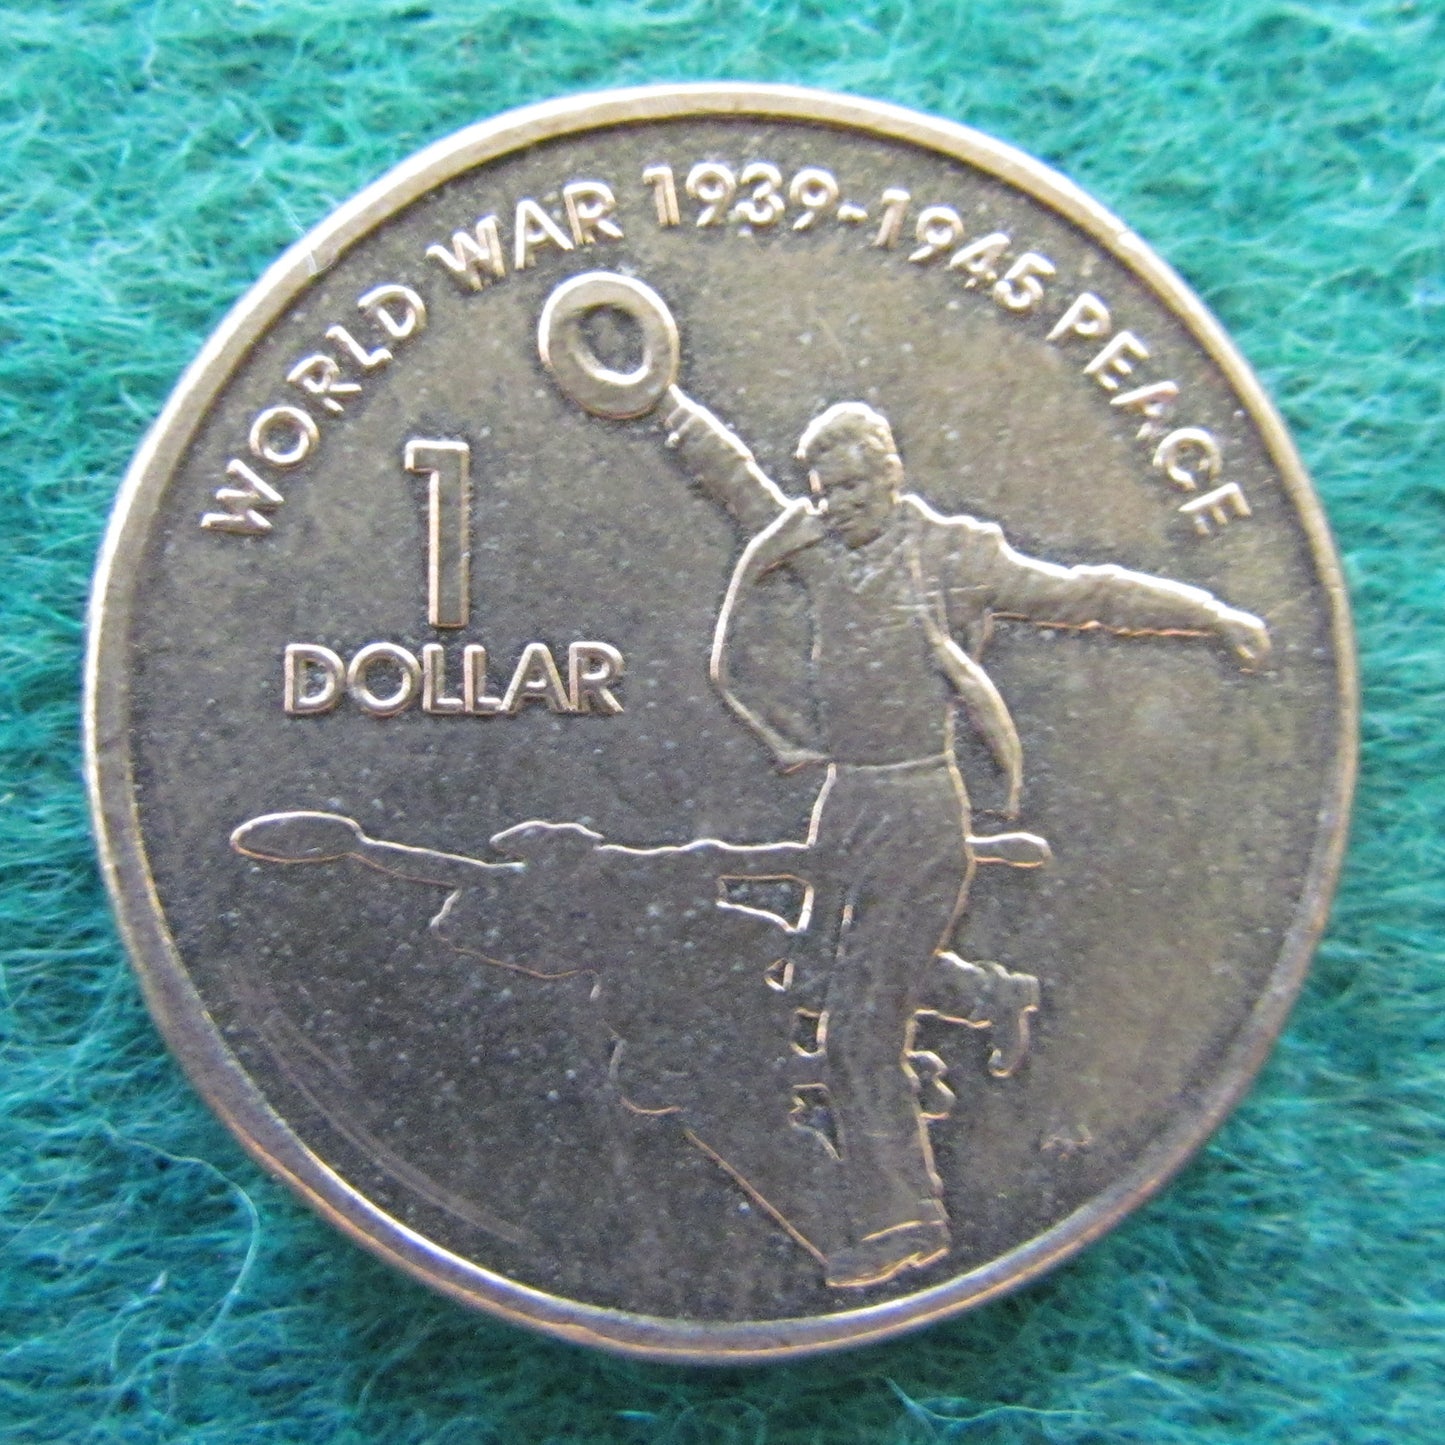 Australian 2005 1 Dollar World War 1939-1945 Peace Queen Elizabeth Coin - Circulated